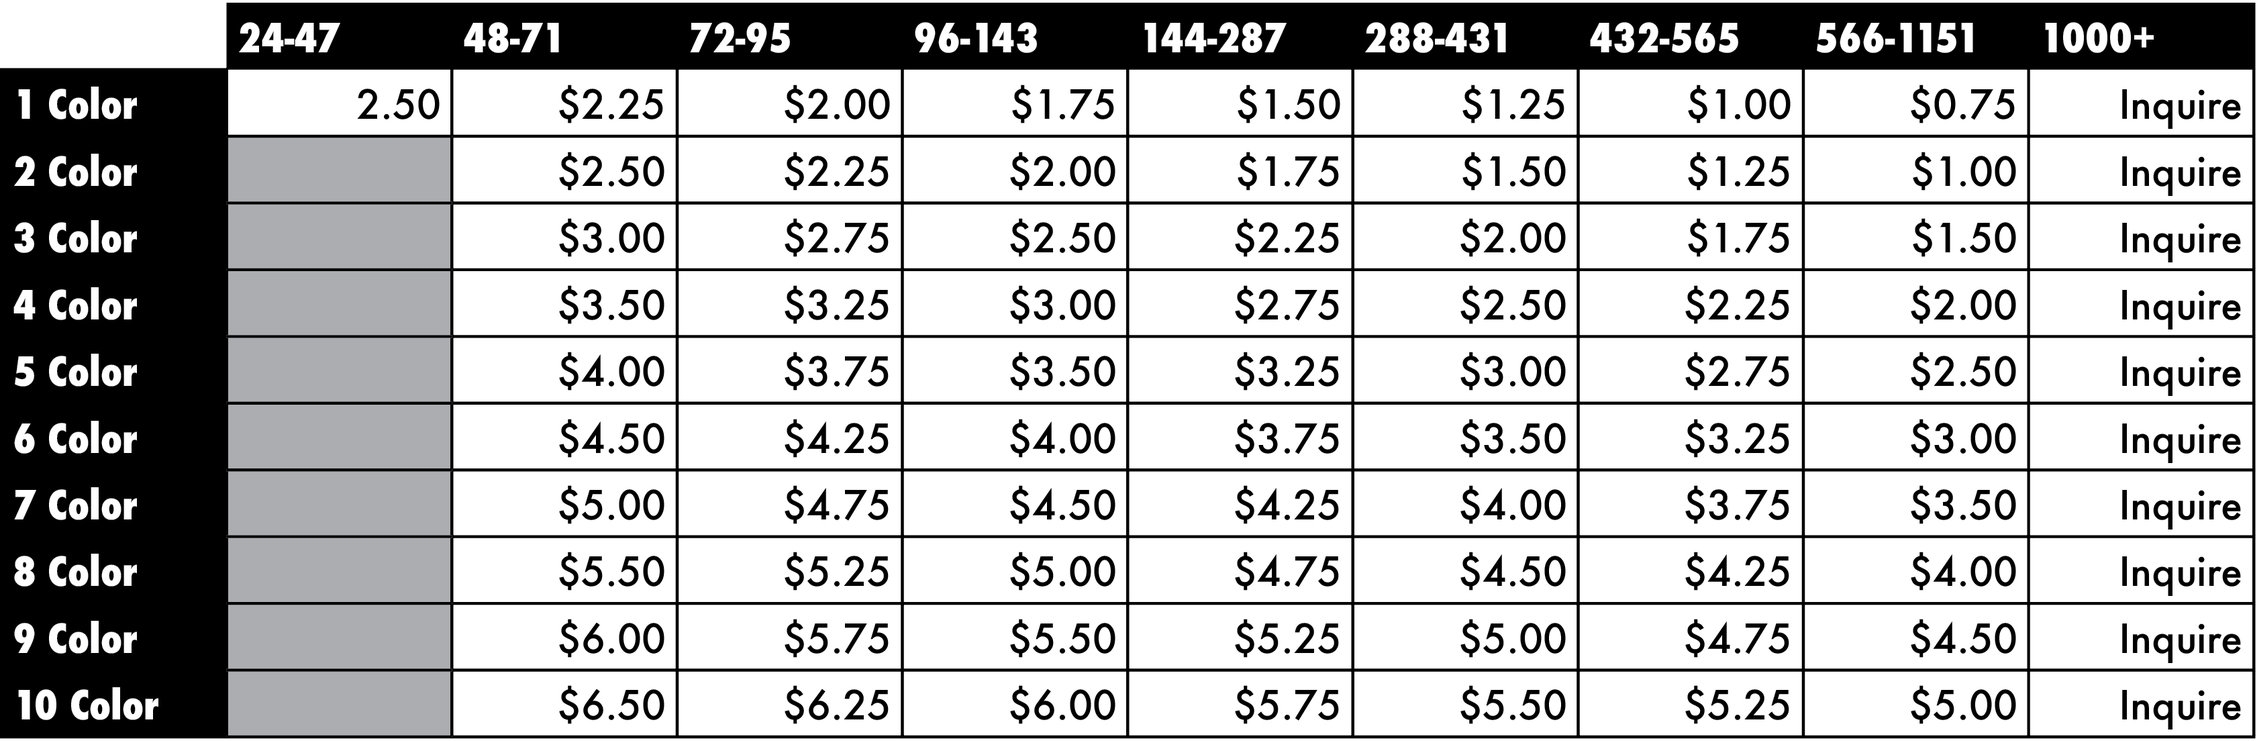 Screen Printing Pricing Chart